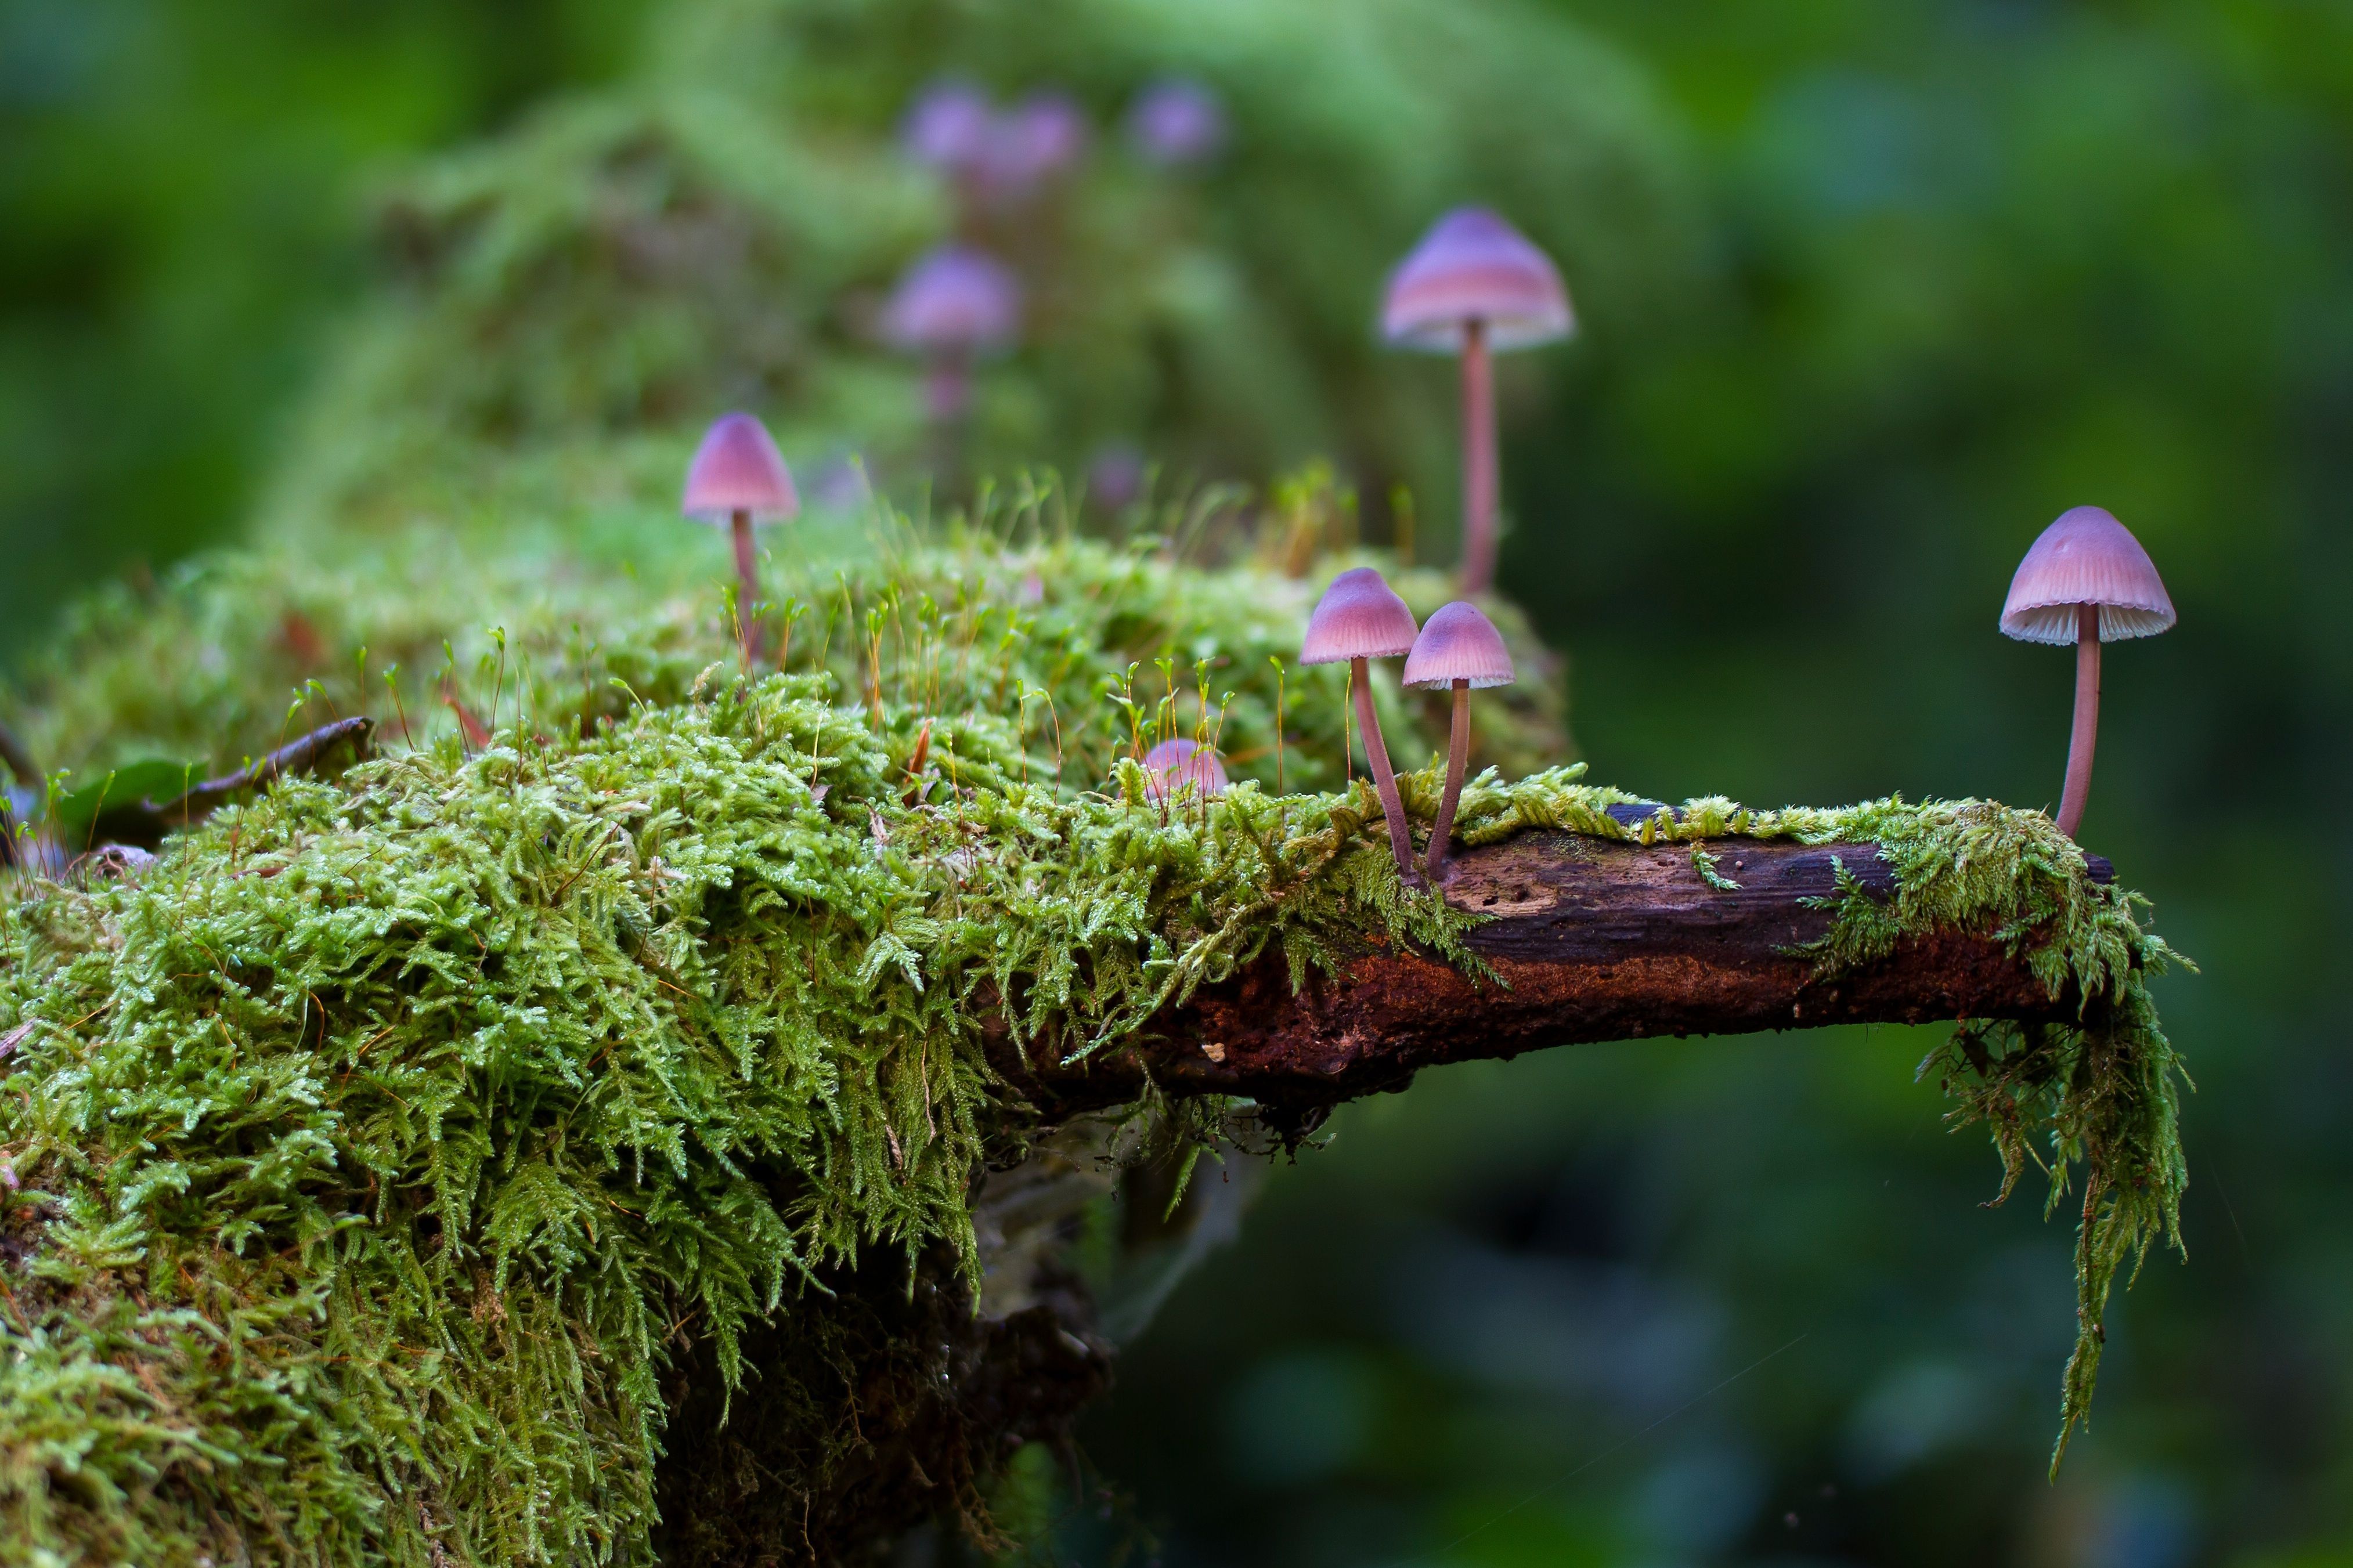 Small mushrooms grow out of a mossy log. - Mushroom